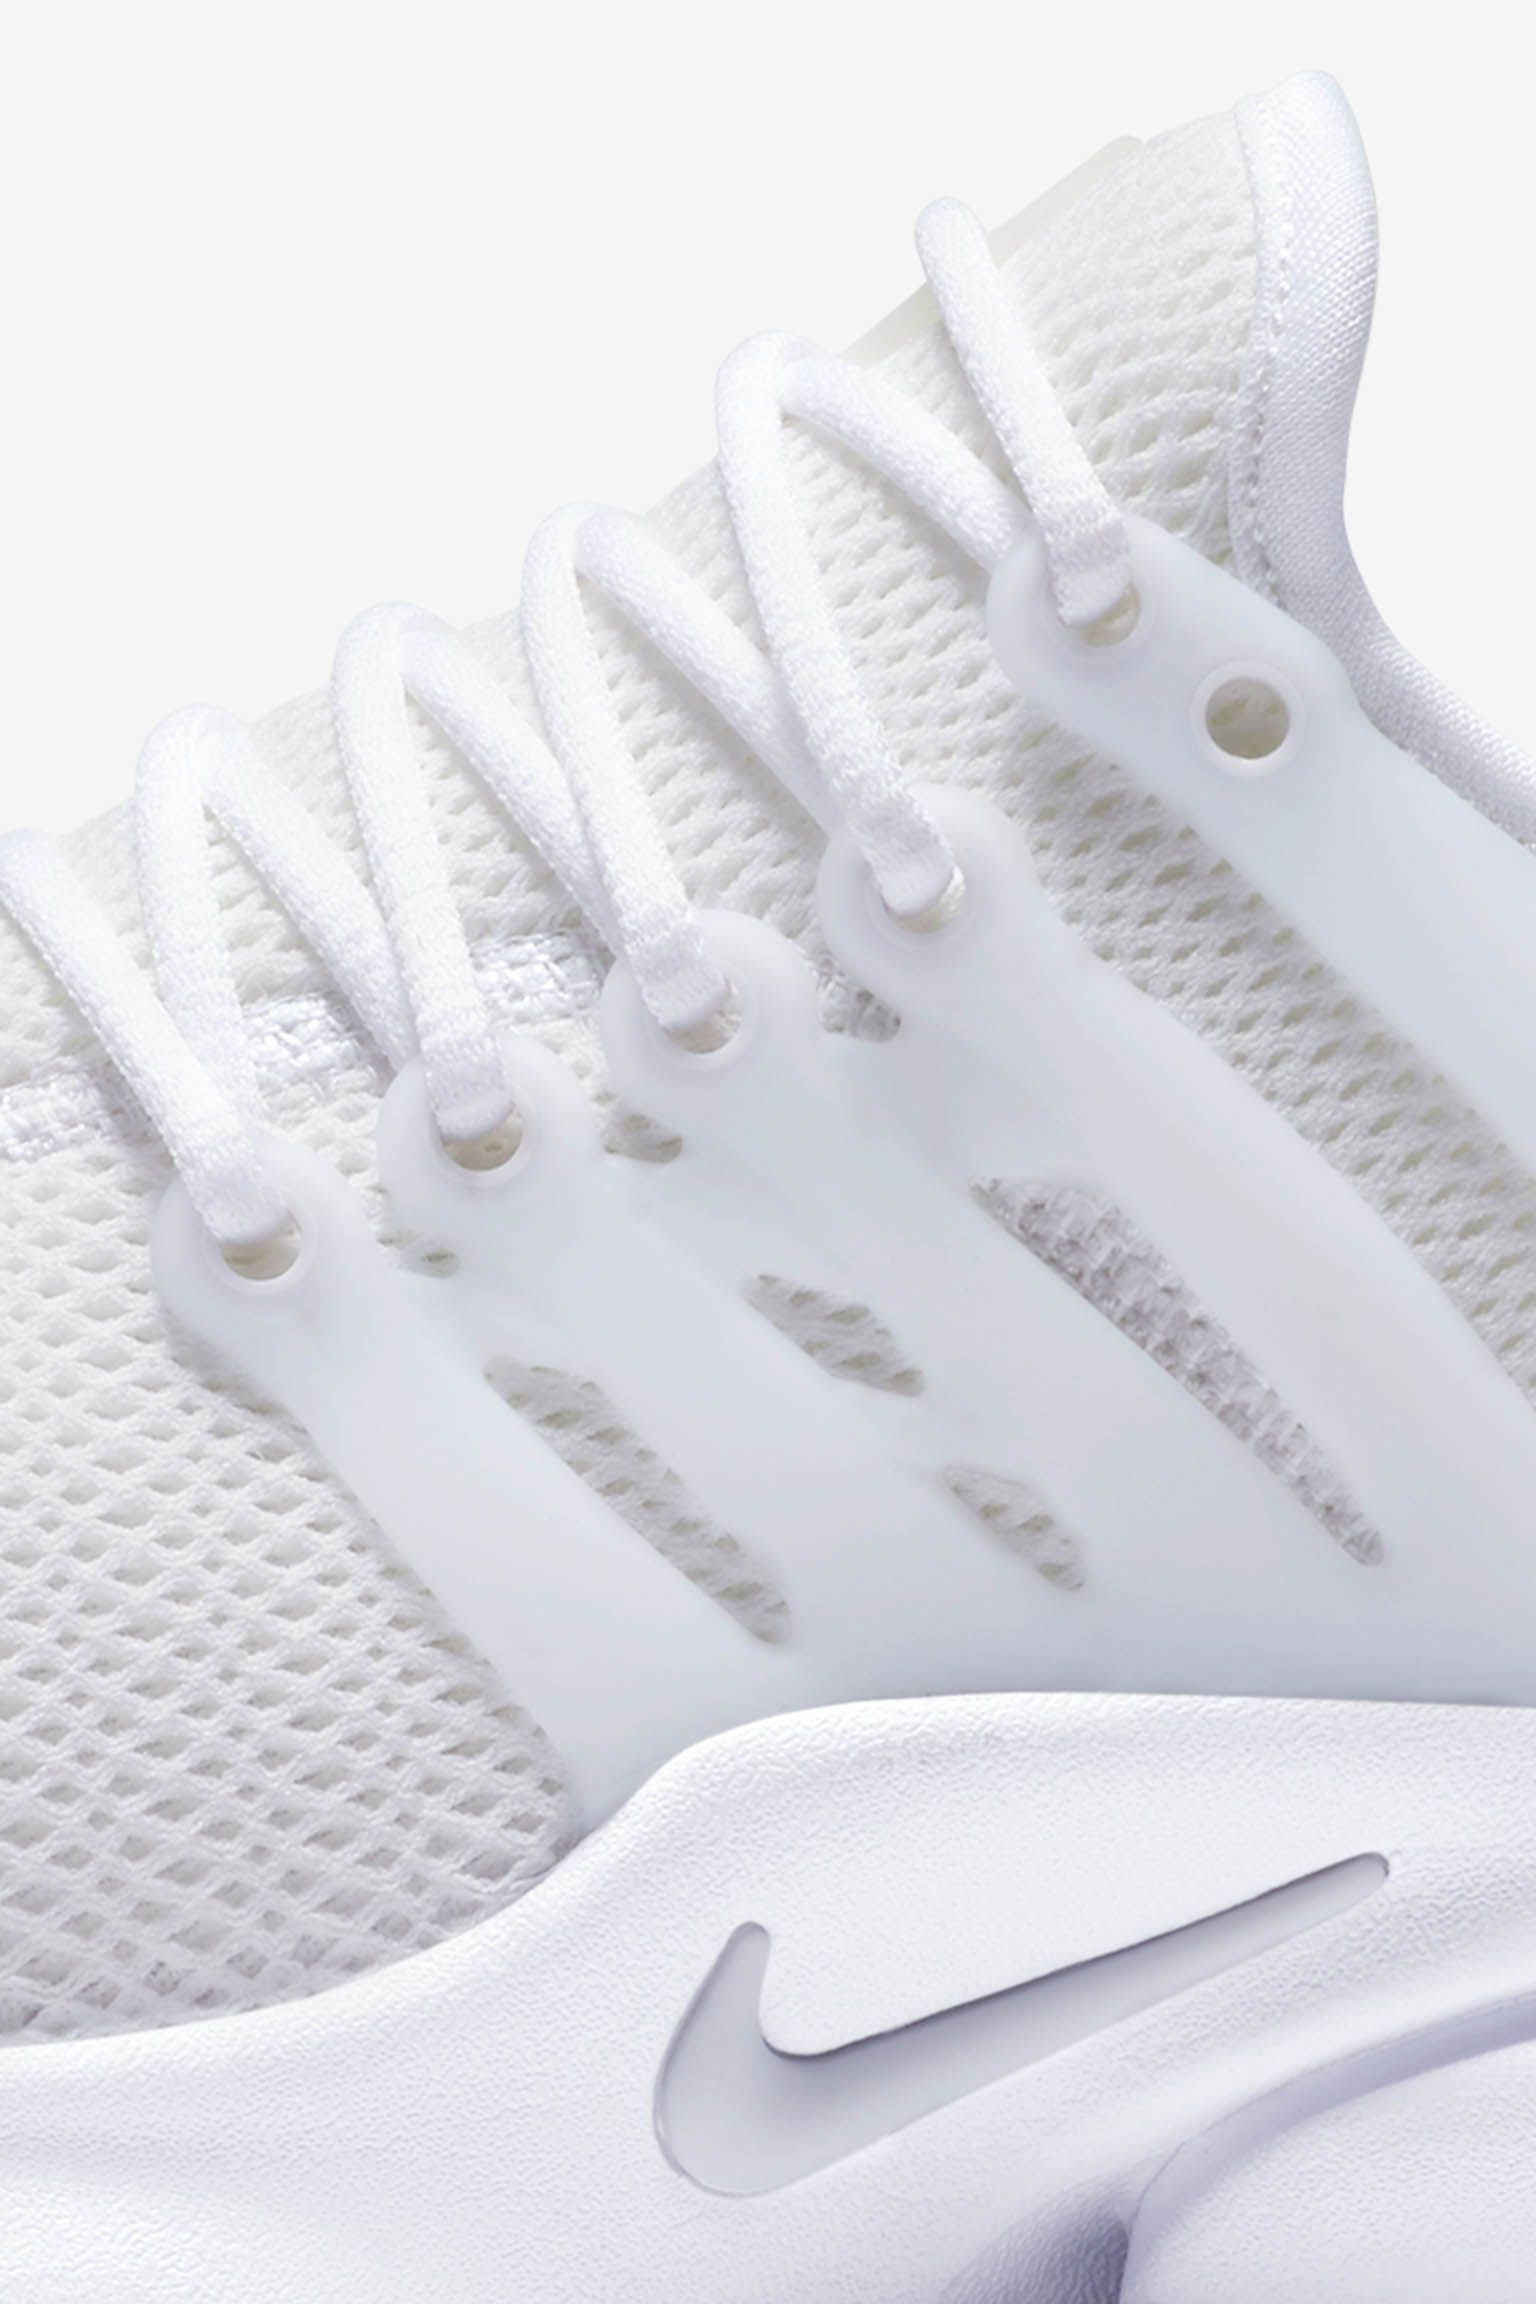 Women's Nike Air Presto 'White & Pure Platinum' Release Date. Nike